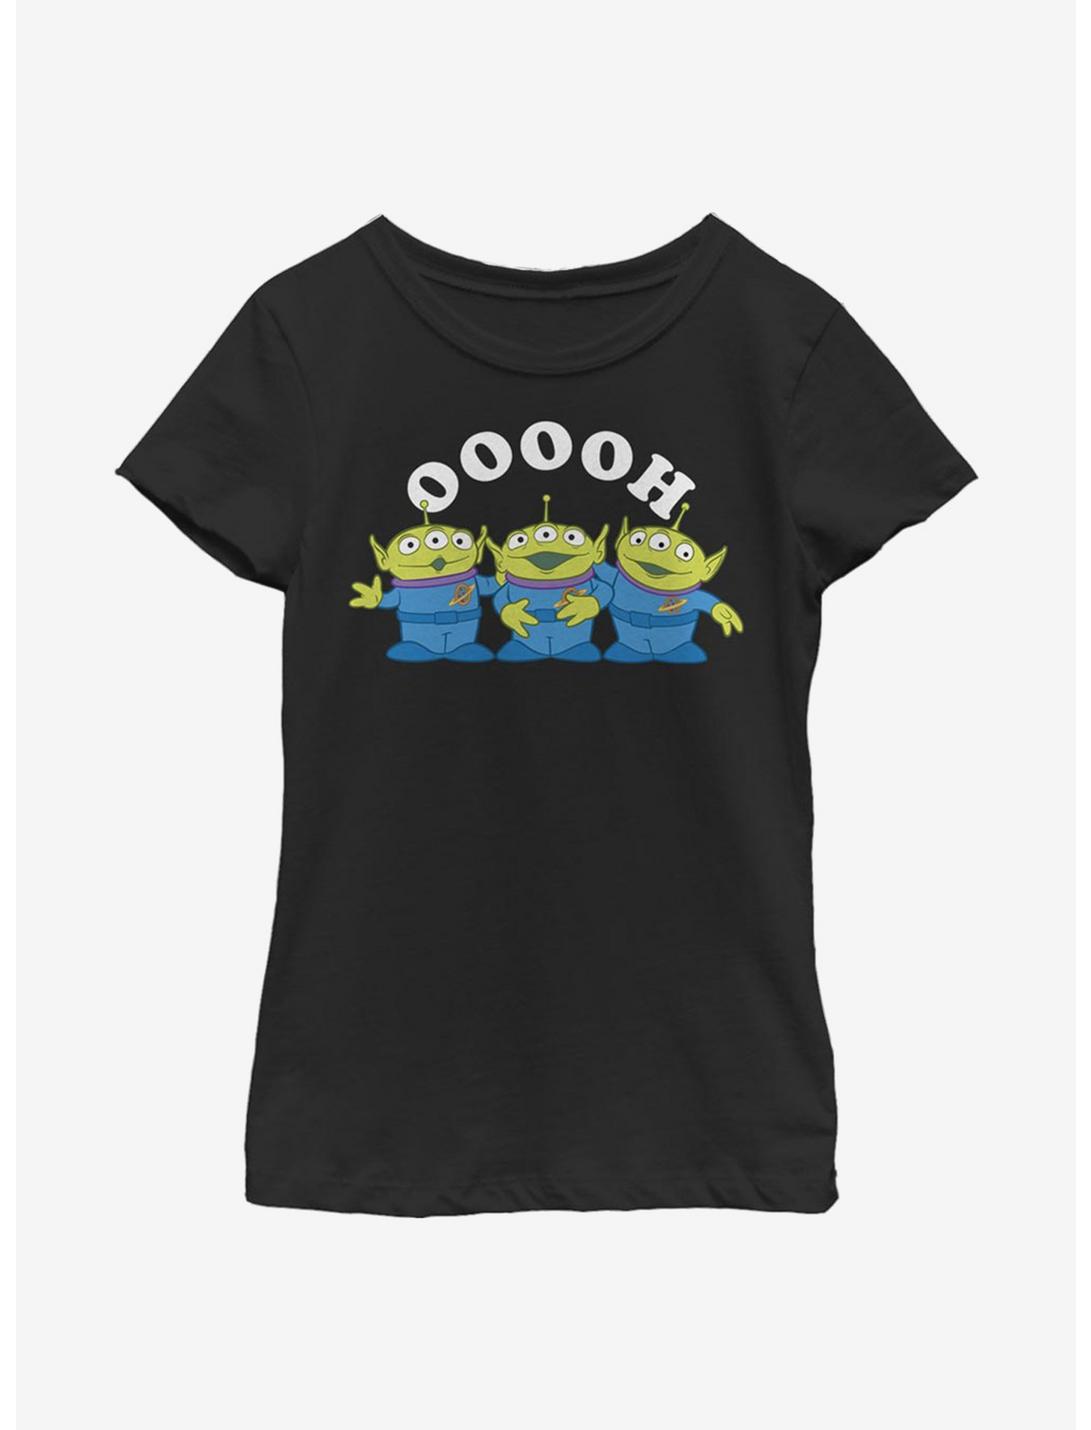 Disney Pixar Toy Story Ooooh Yeah Youth Girls T-Shirt, BLACK, hi-res